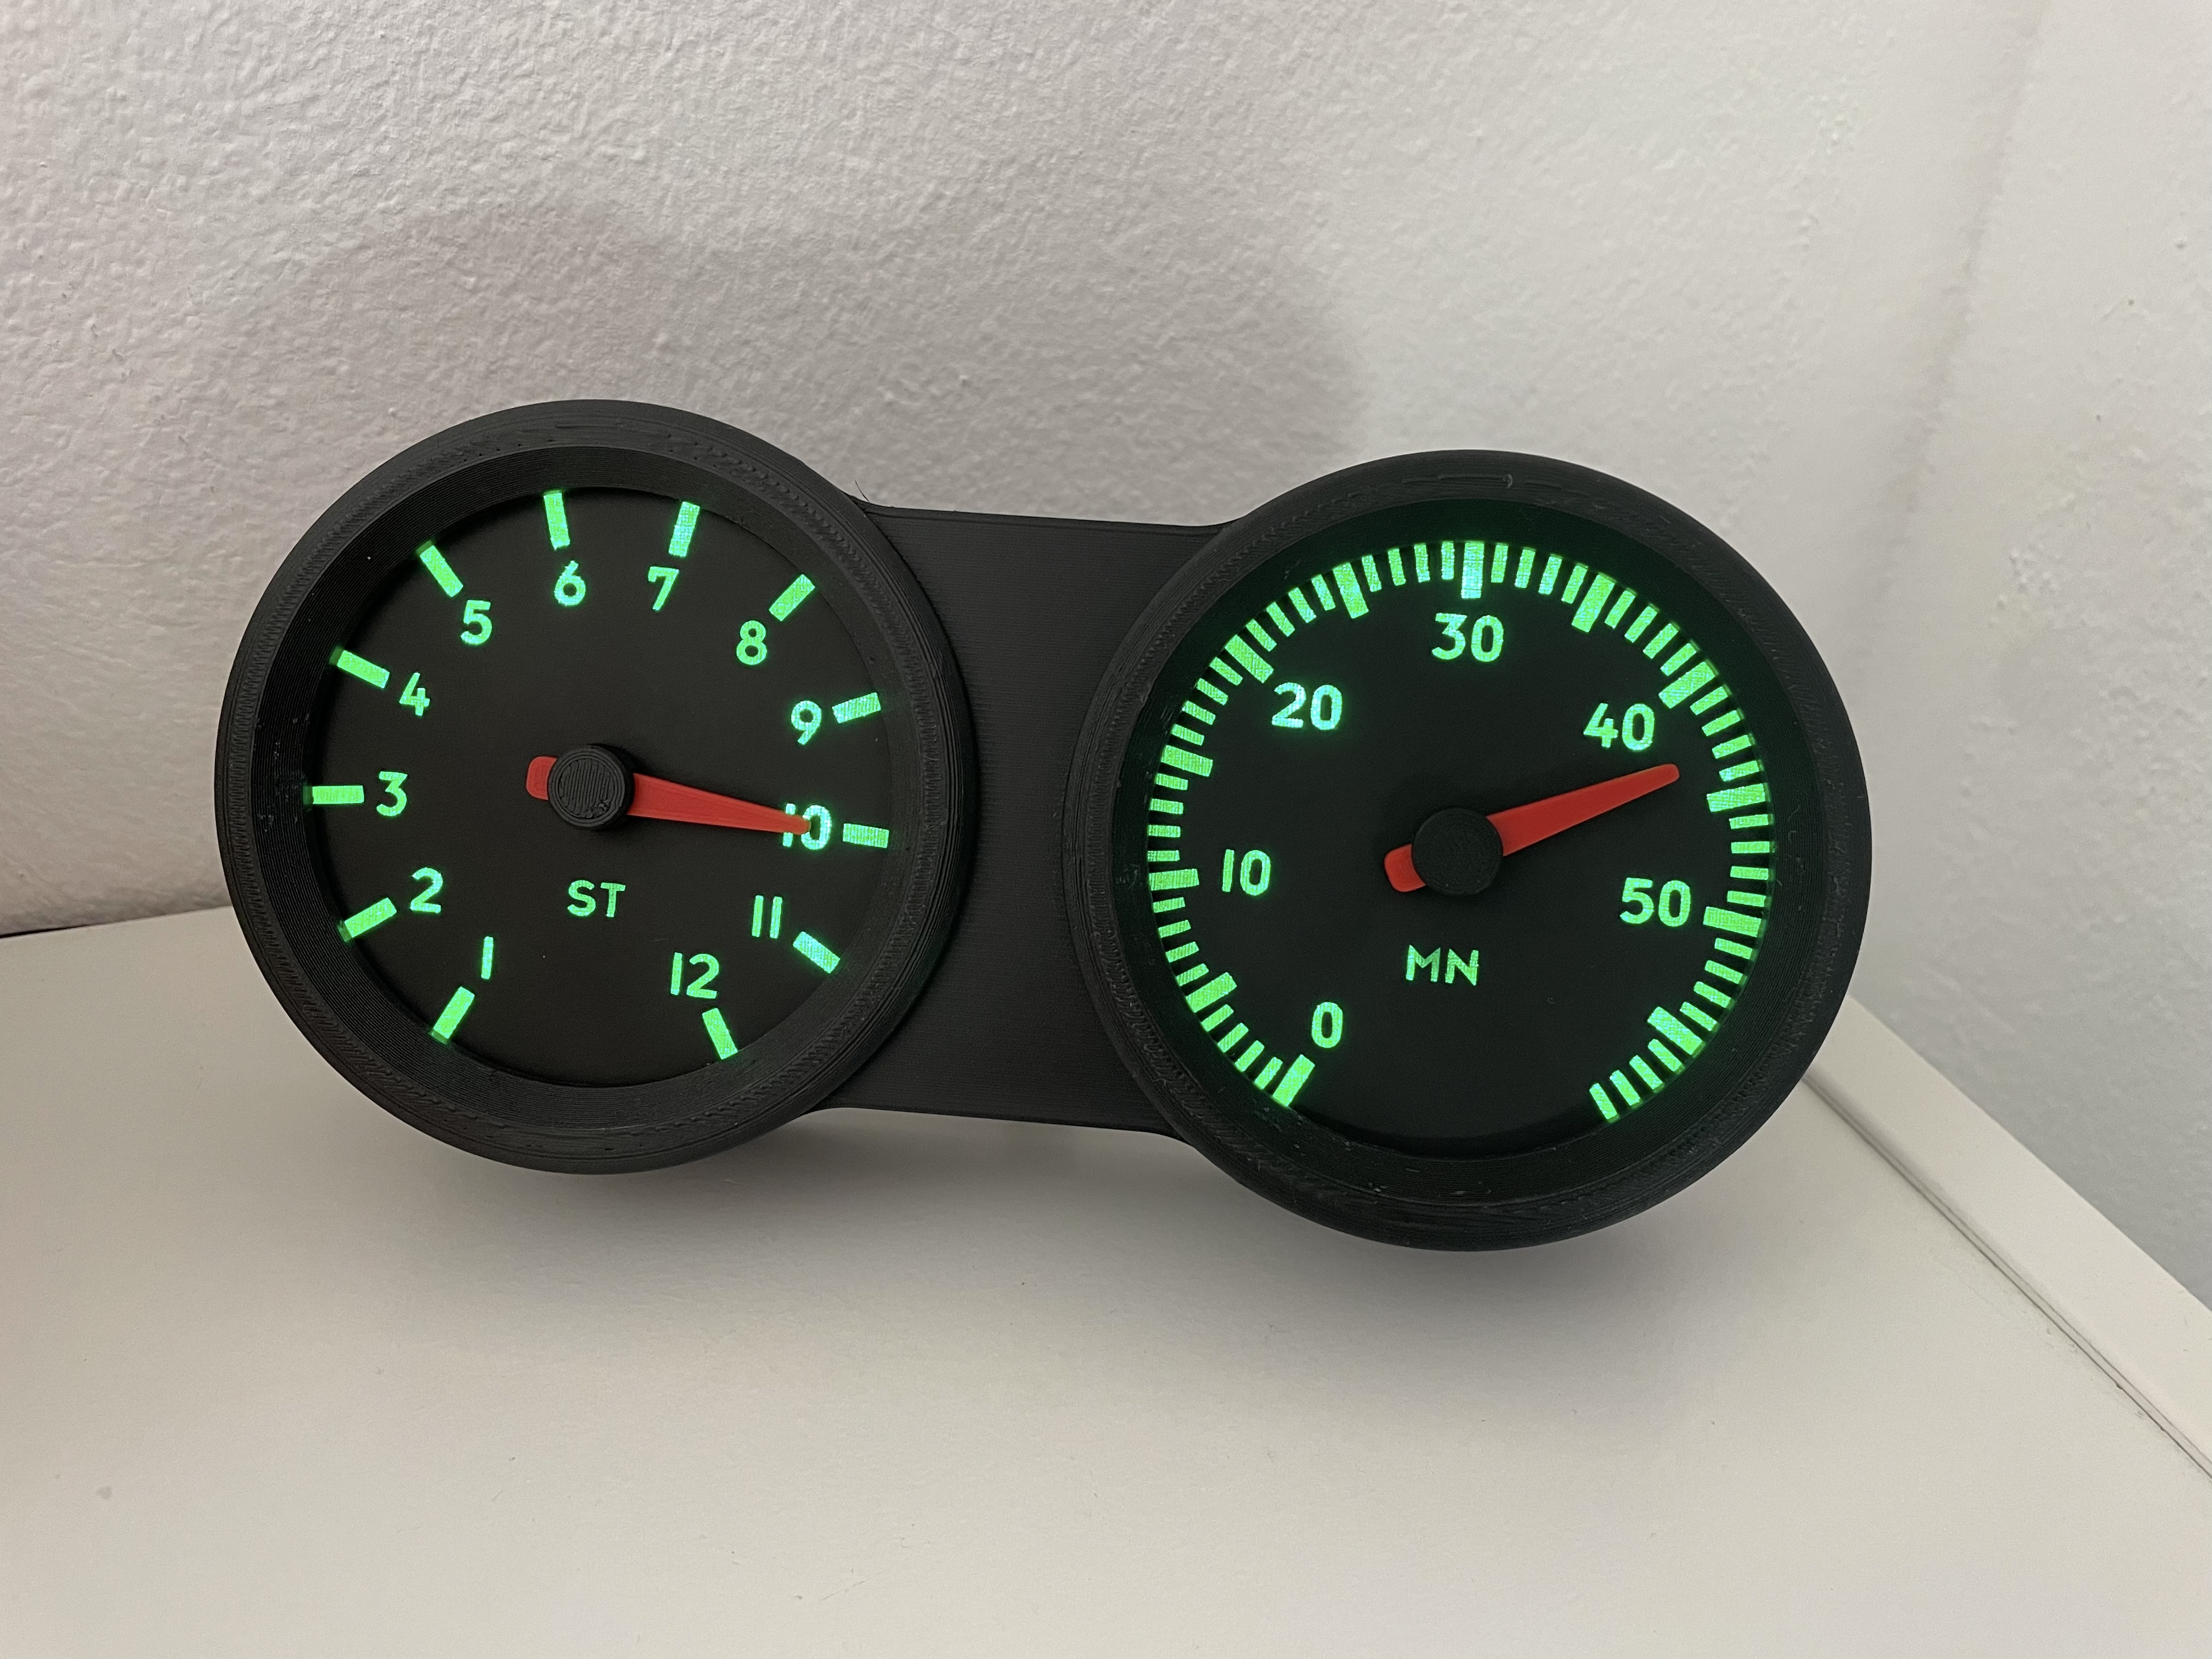 Honda Limited Edition Speedometer Watch PR-1132 - Made in Japan | eBay